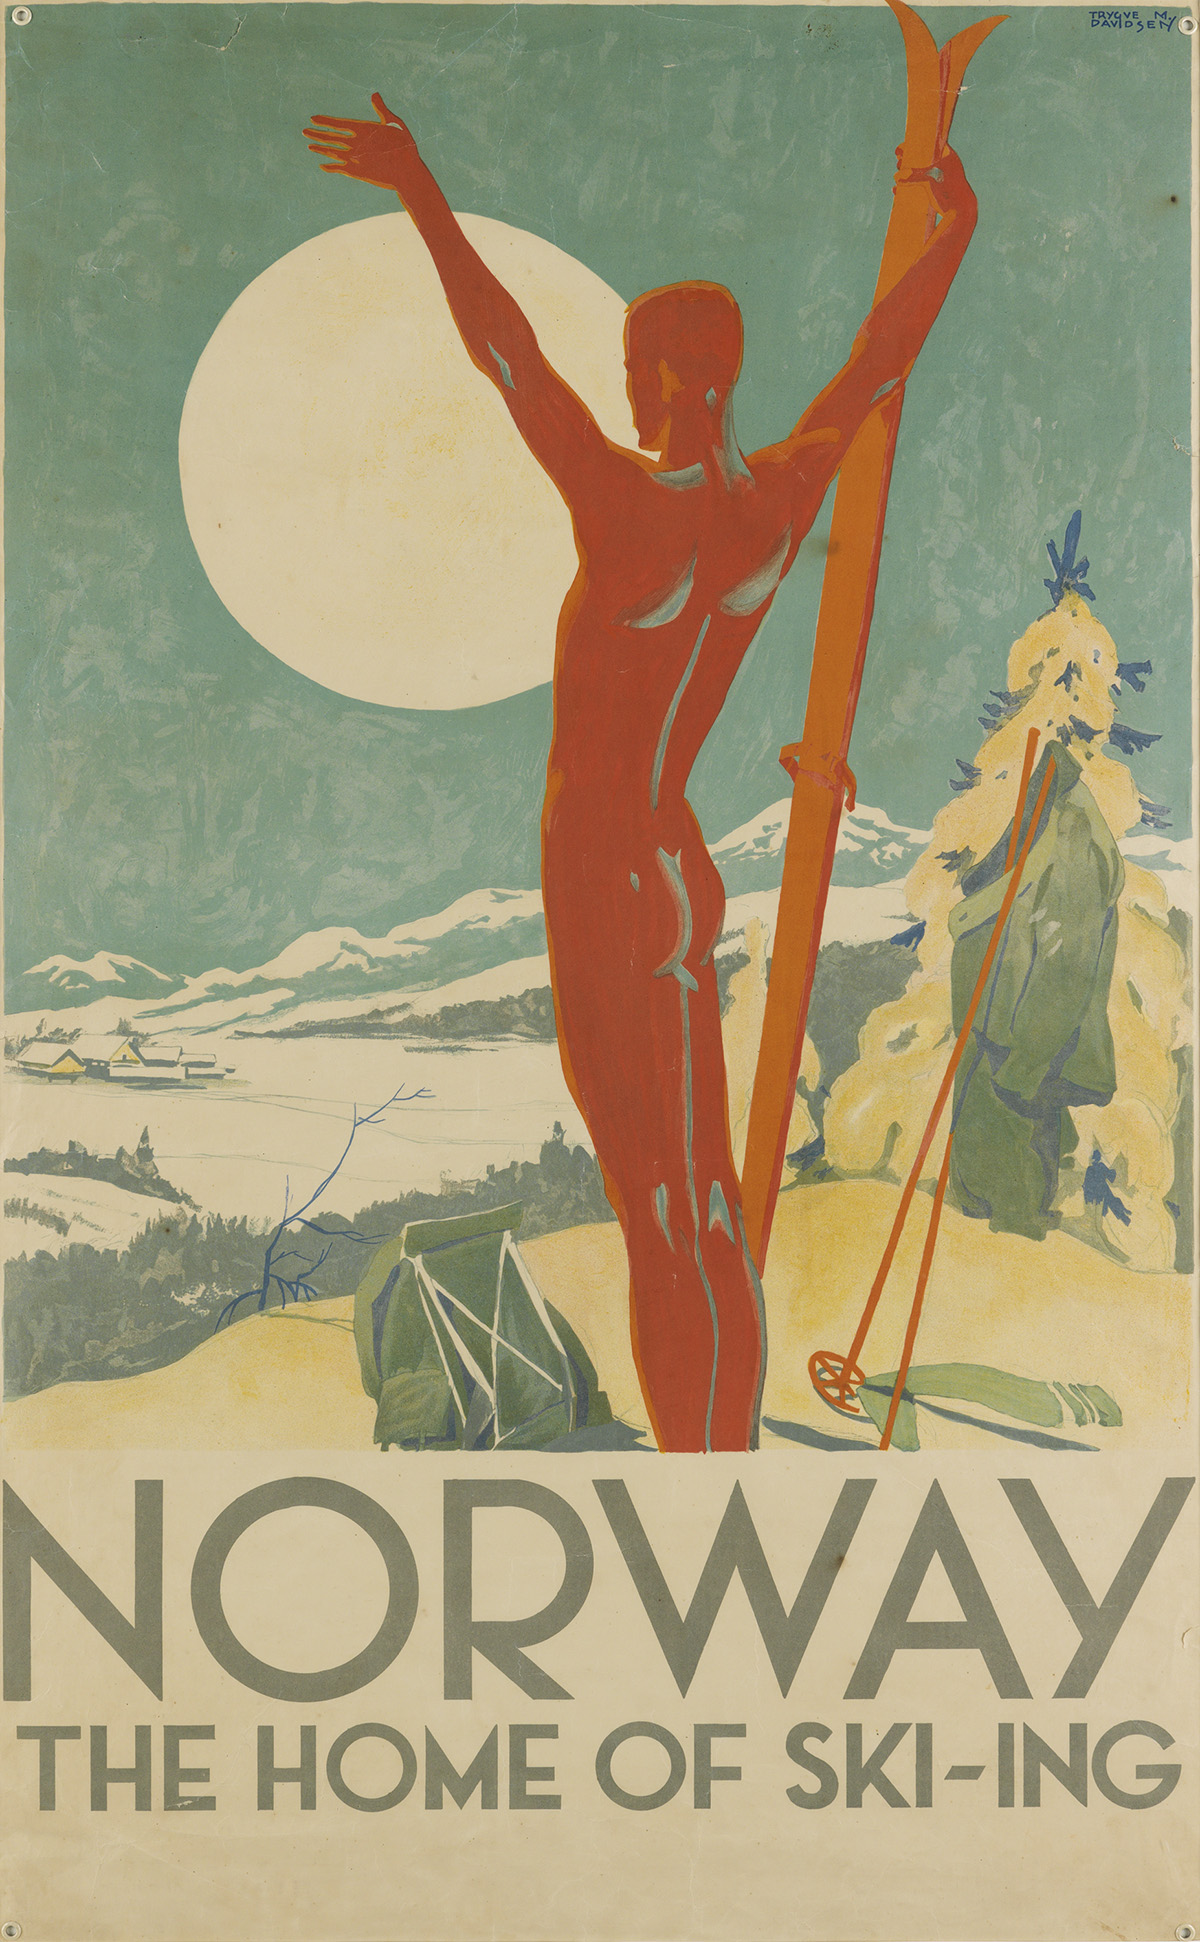 TRYGVE M. DAVIDSEN (1895-1978). NORWAY / THE HOME OF SKI - ING. Circa 1926. 38x23 inches, 97x60 cm. [Hagen & Kornmann, Oslo.]